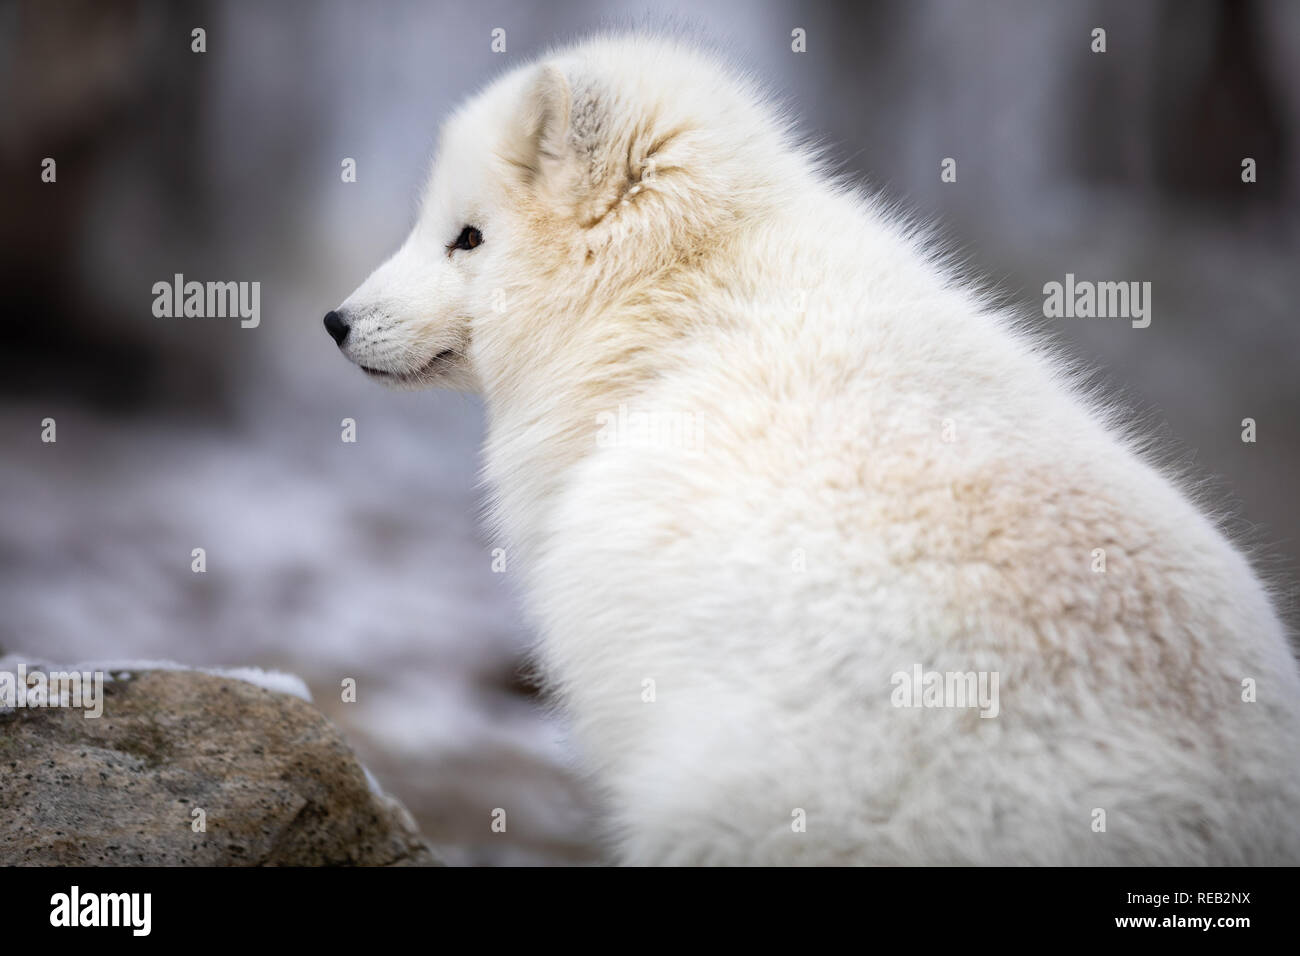 Hermoso zorro ártico en abrigo blanco sentado Foto de stock